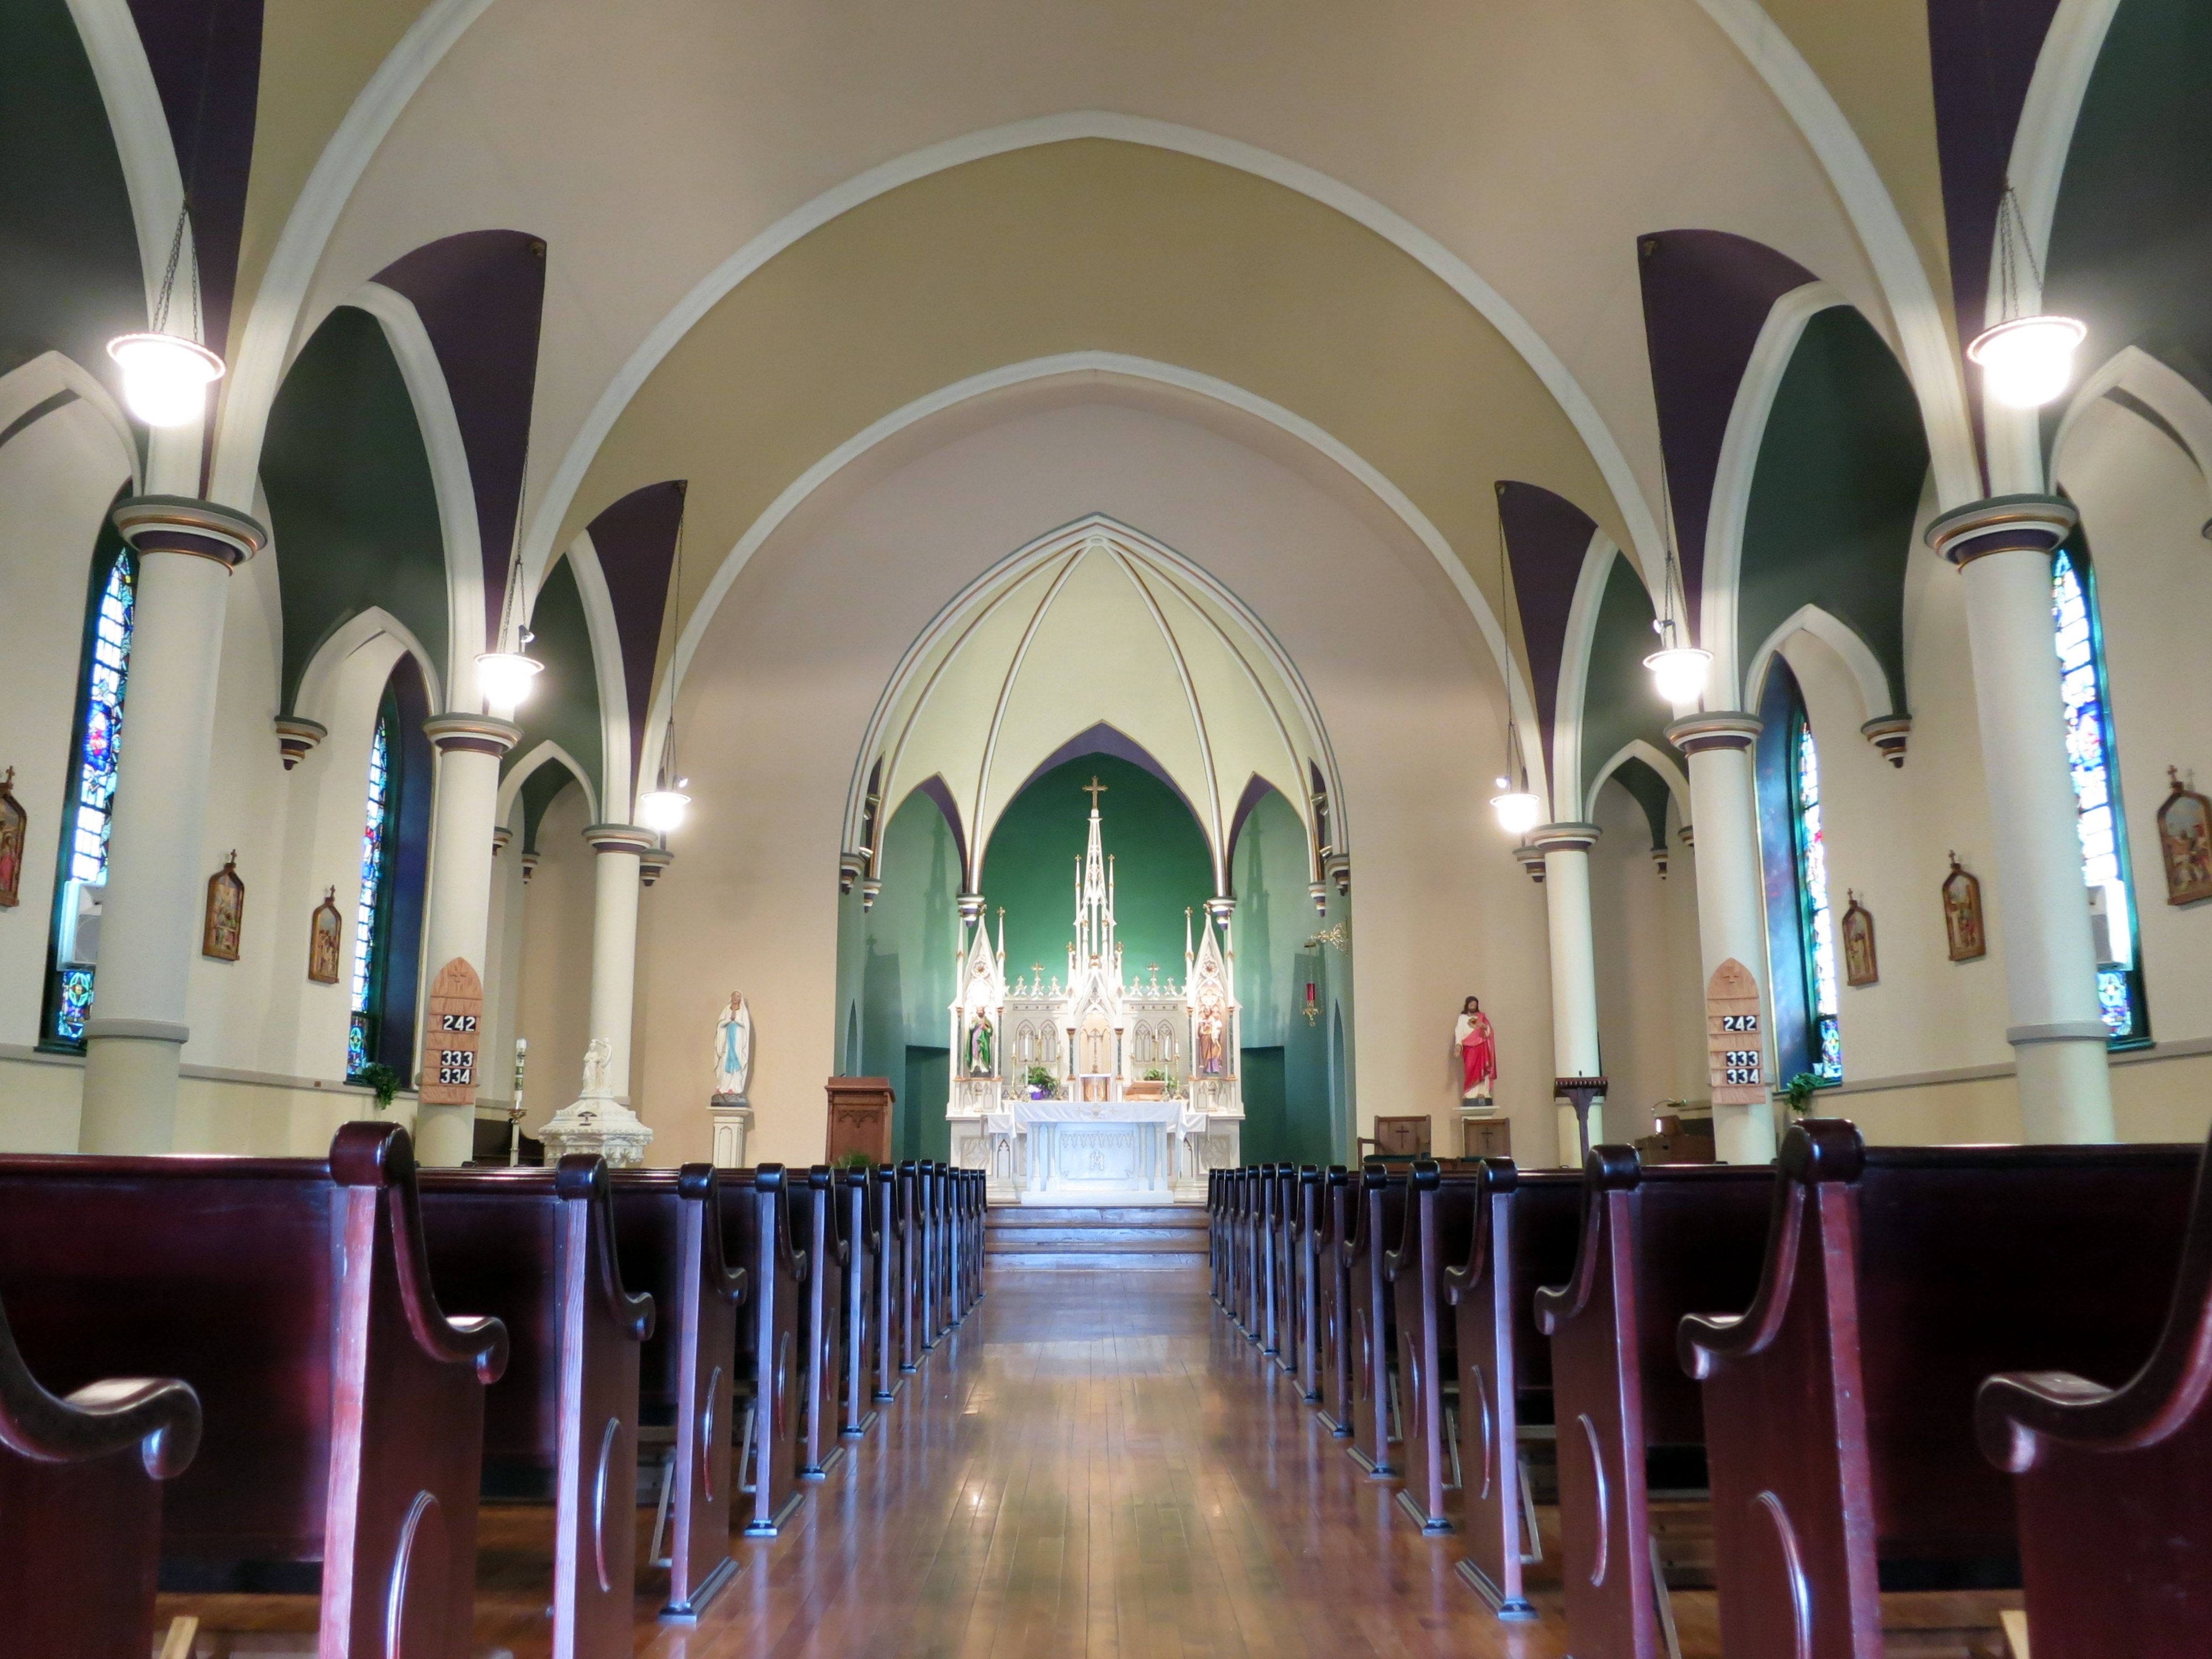 St. Patrick Parish